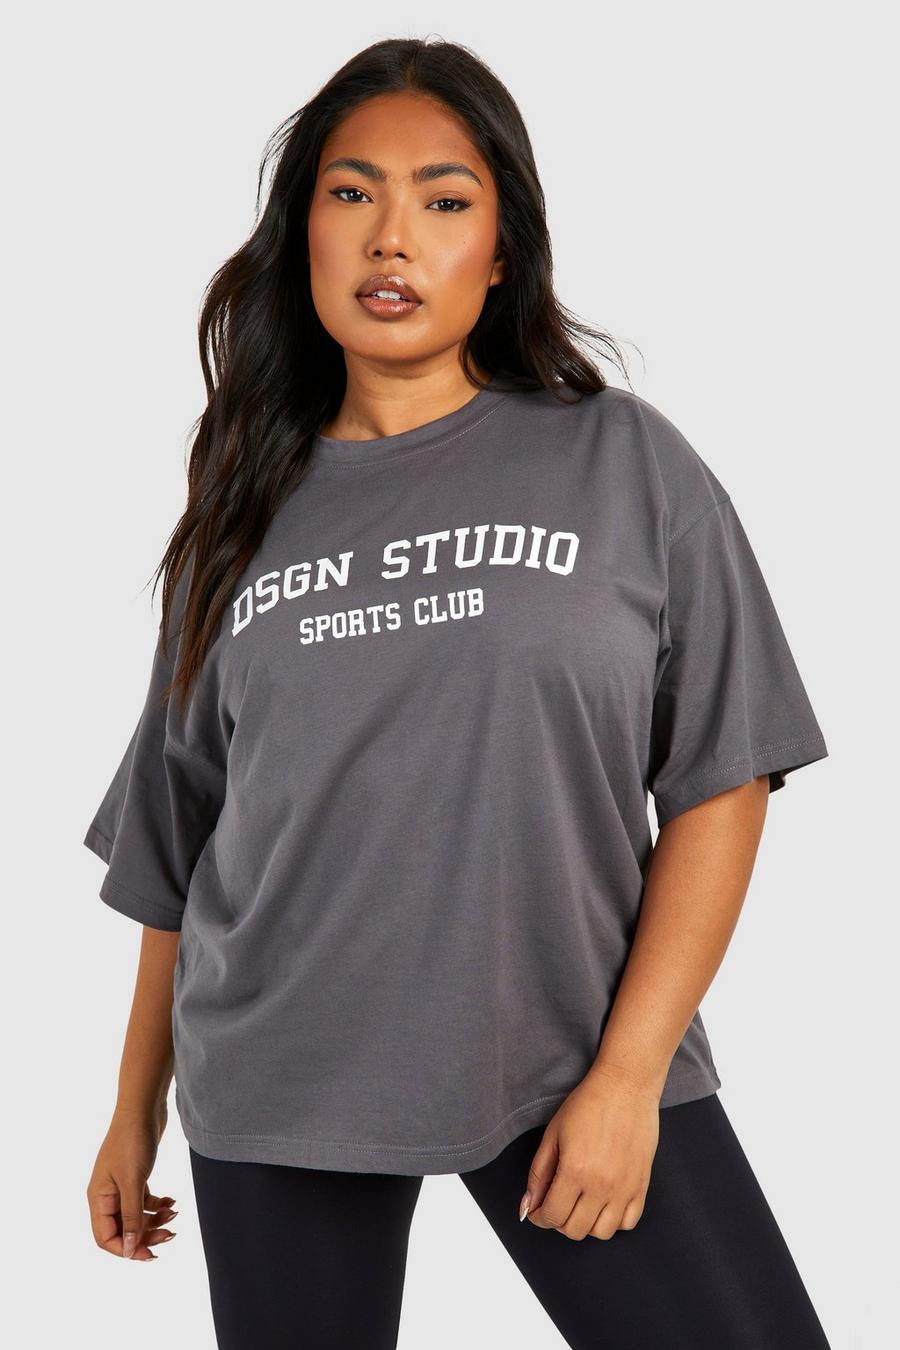 T-shirt Plus Size oversize Dsgn Studio Sports Club, Charcoal